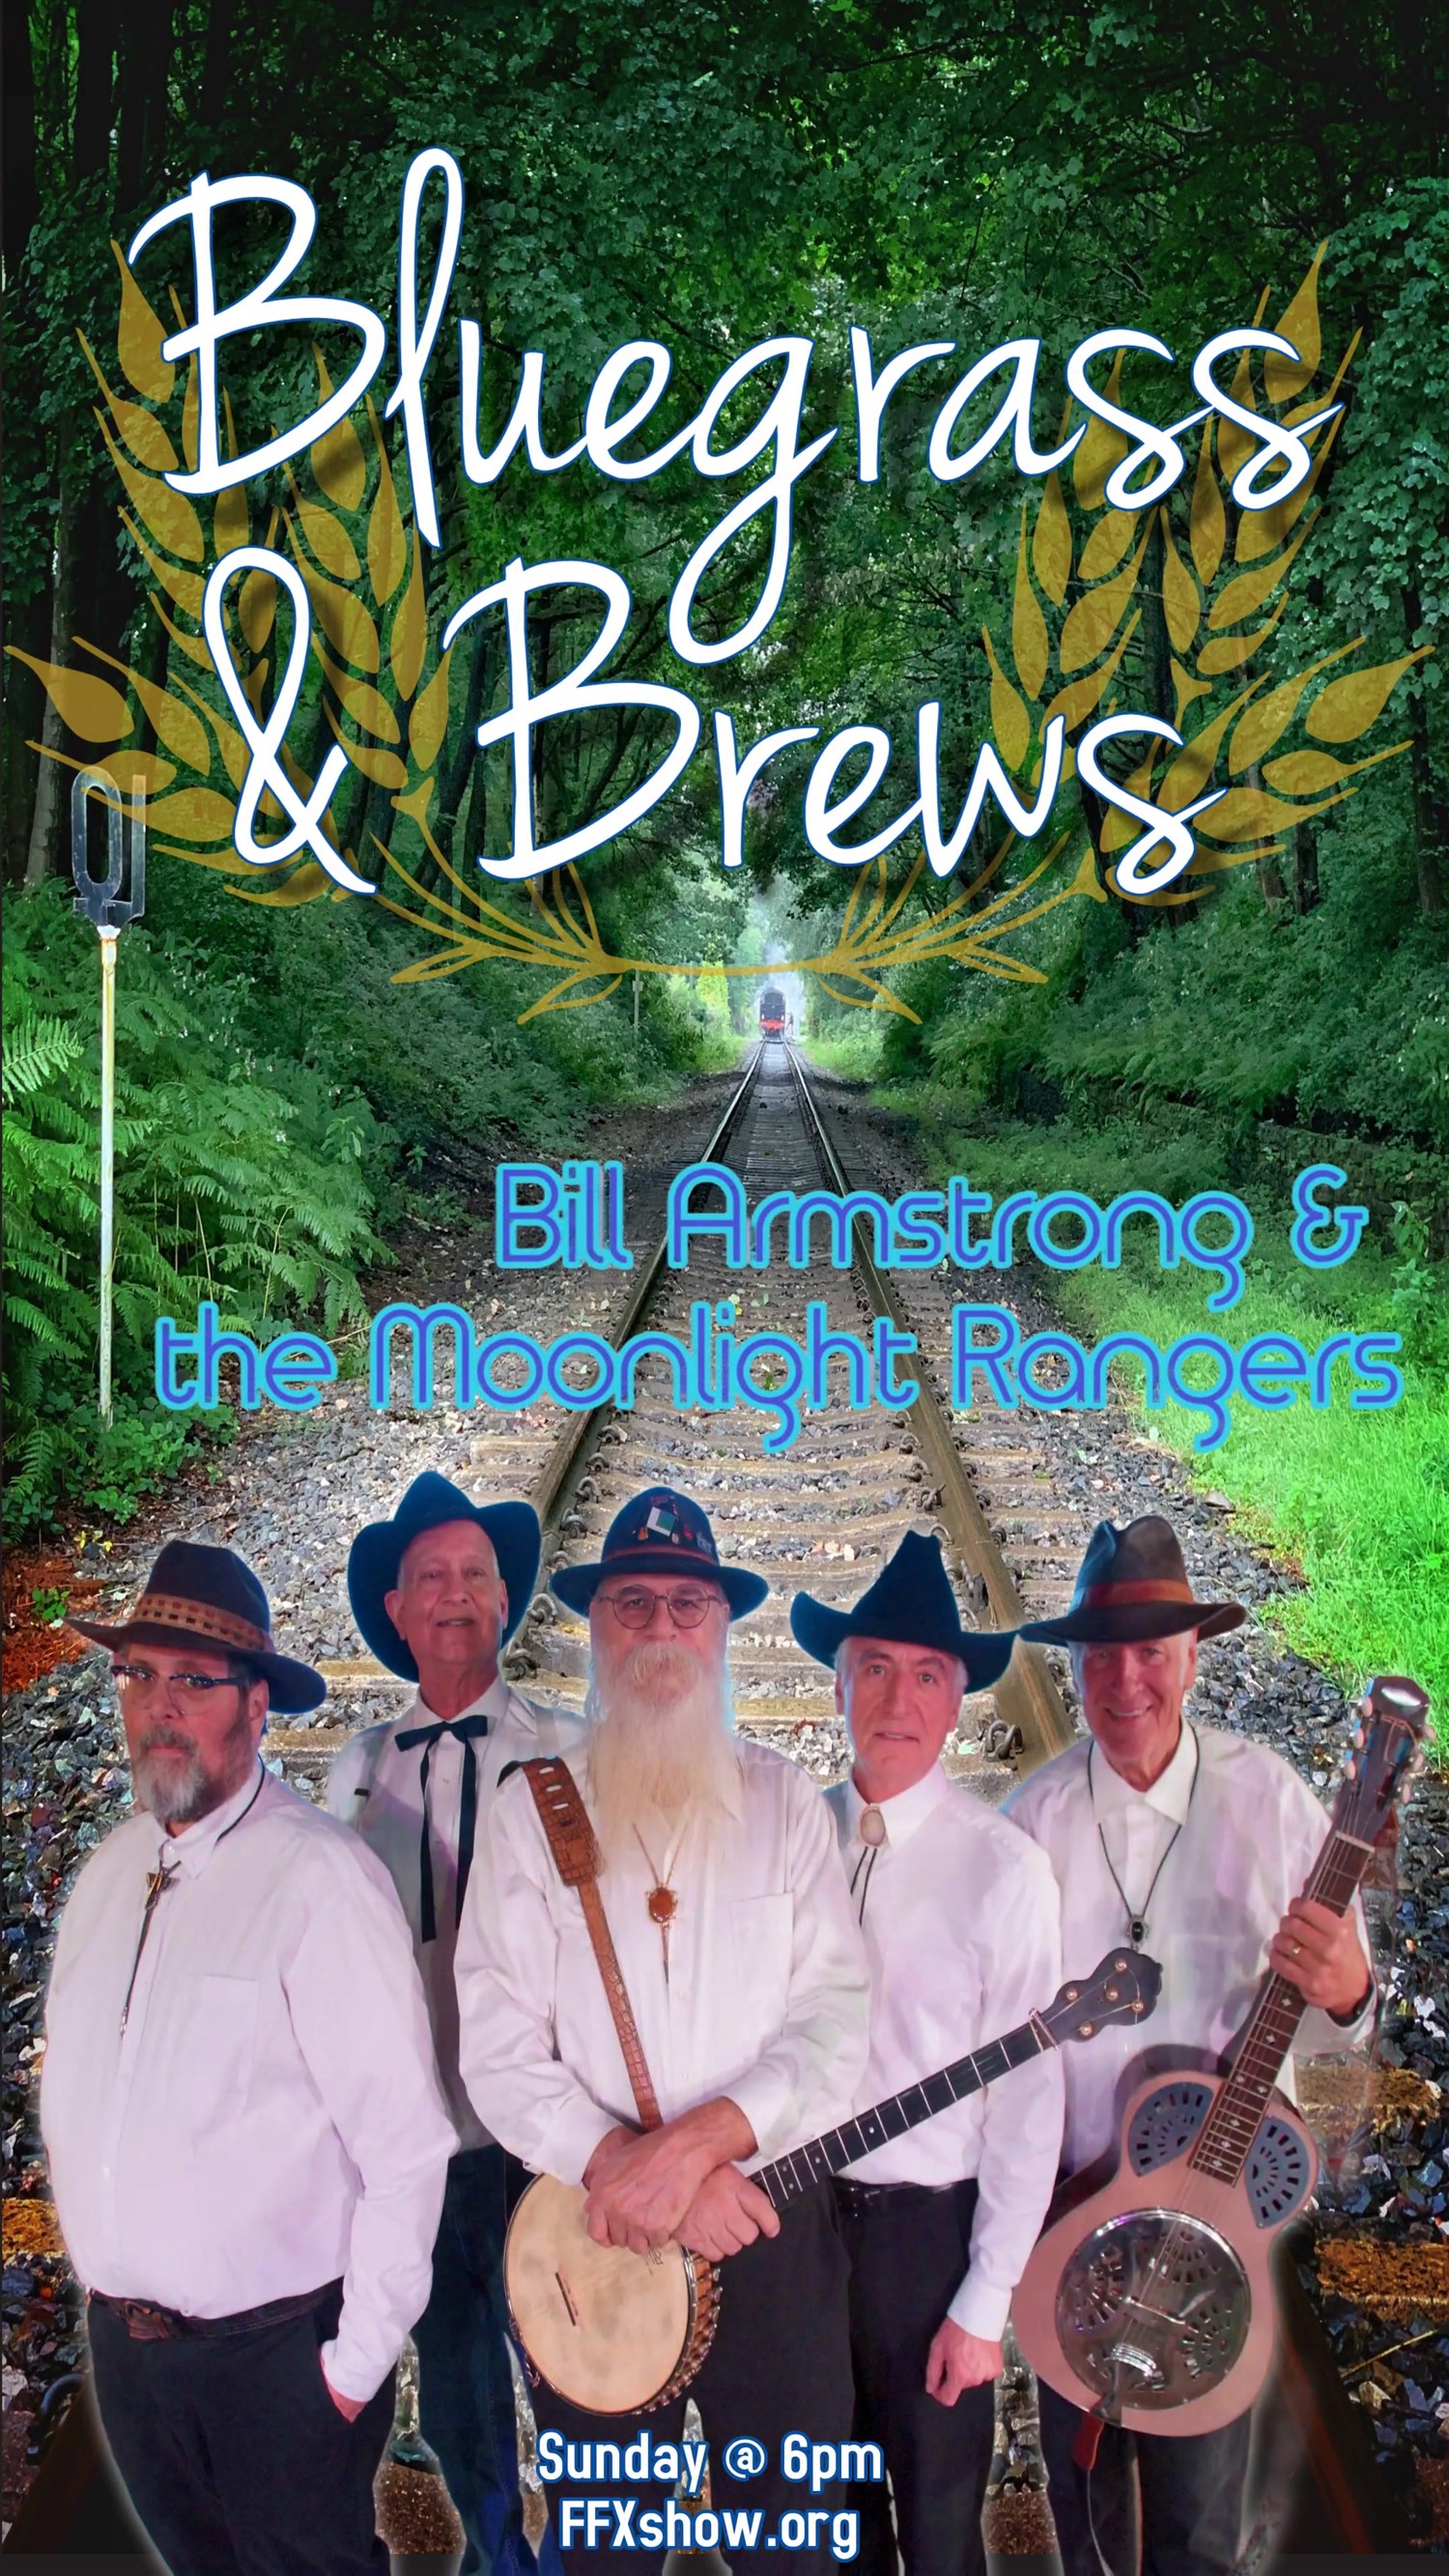 Bluegrass & Brews LIVE CONCERT & JAM SESSION on abr. 21, 18:00@FFX Theatre - Compra entradas y obtén información enFamily Fun Xperience tickets.ffxshow.org